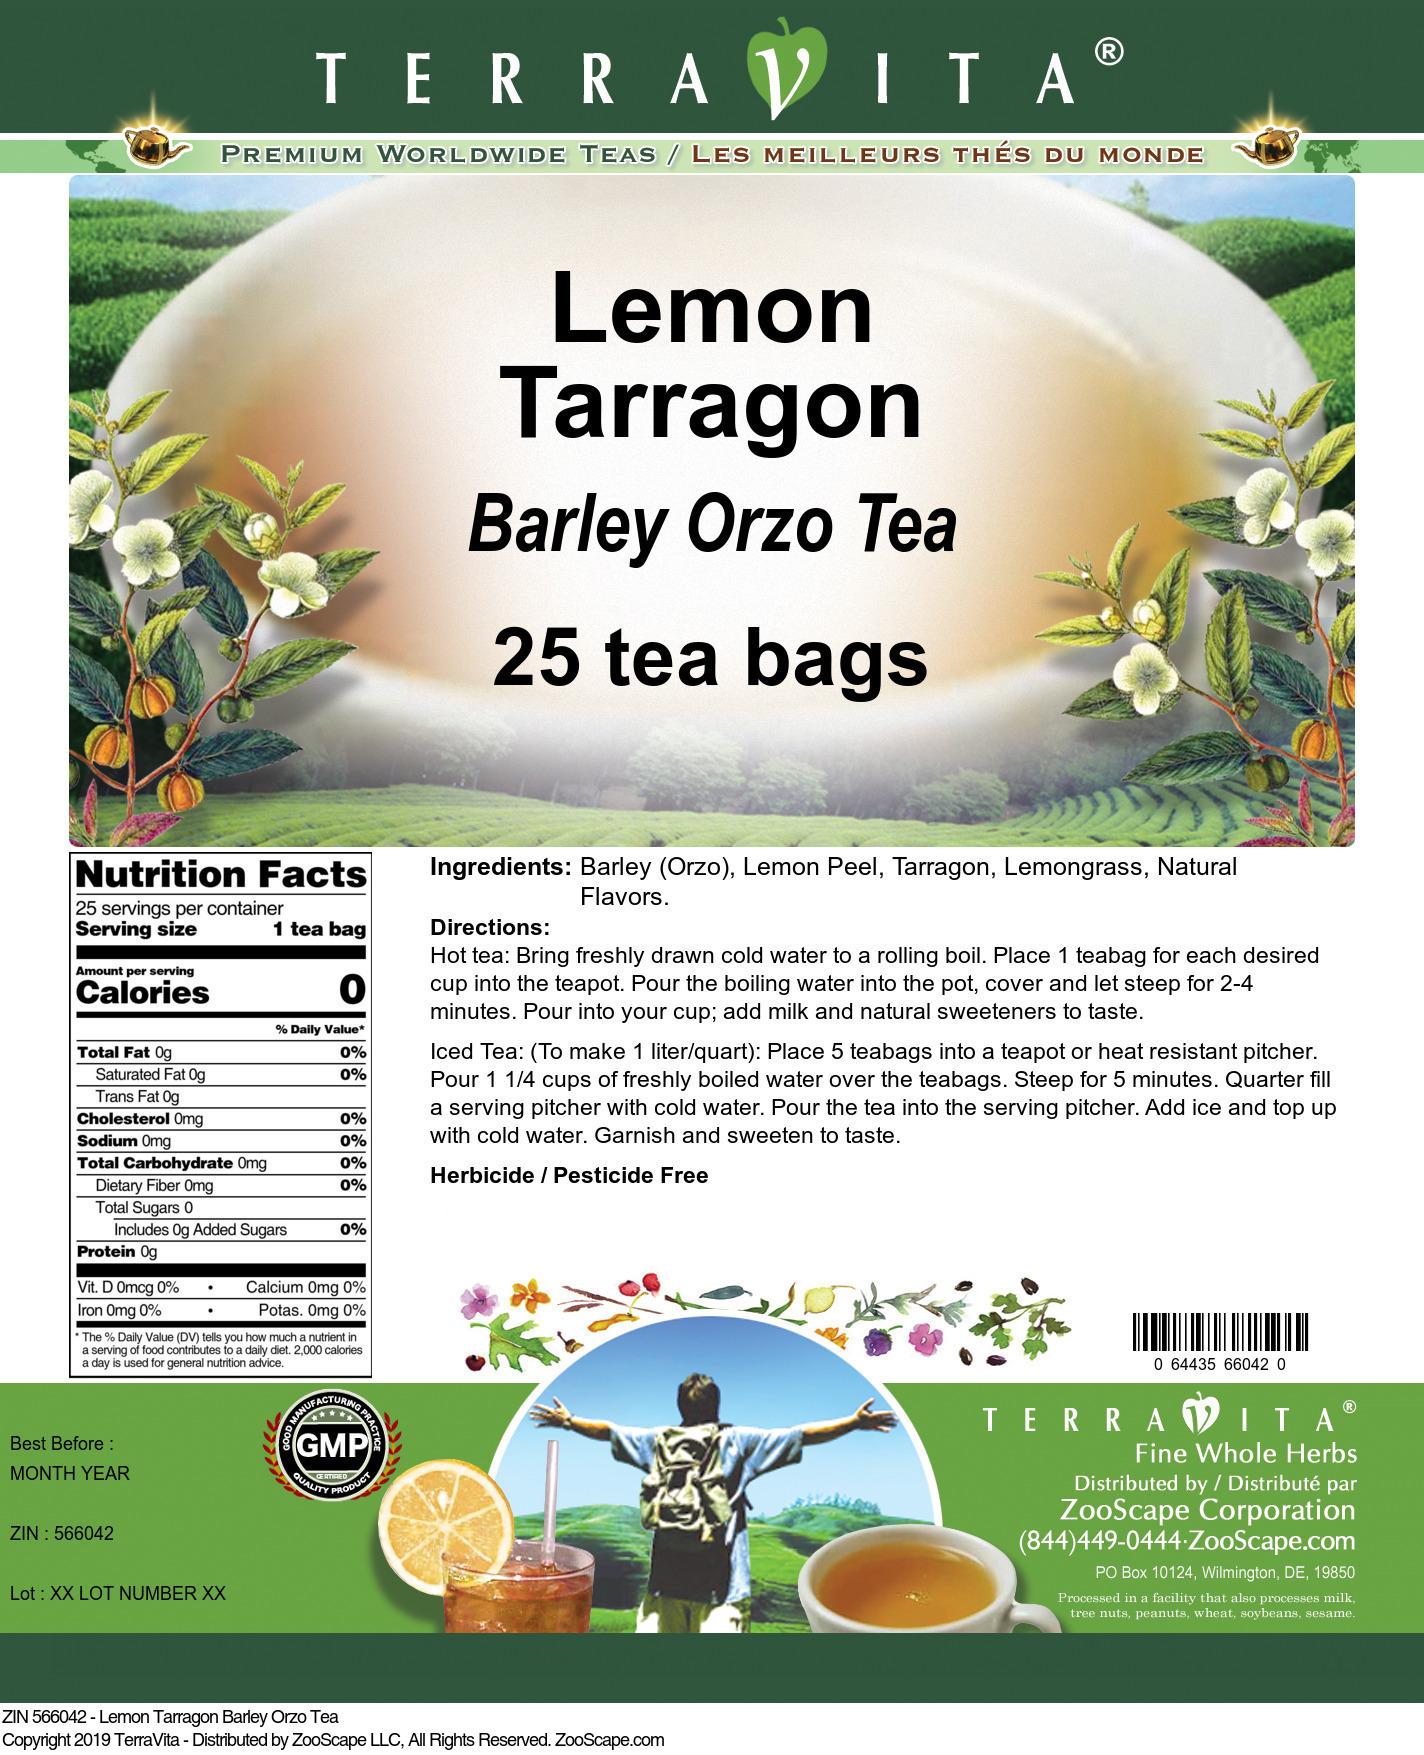 Lemon Tarragon Barley Orzo Tea - Label